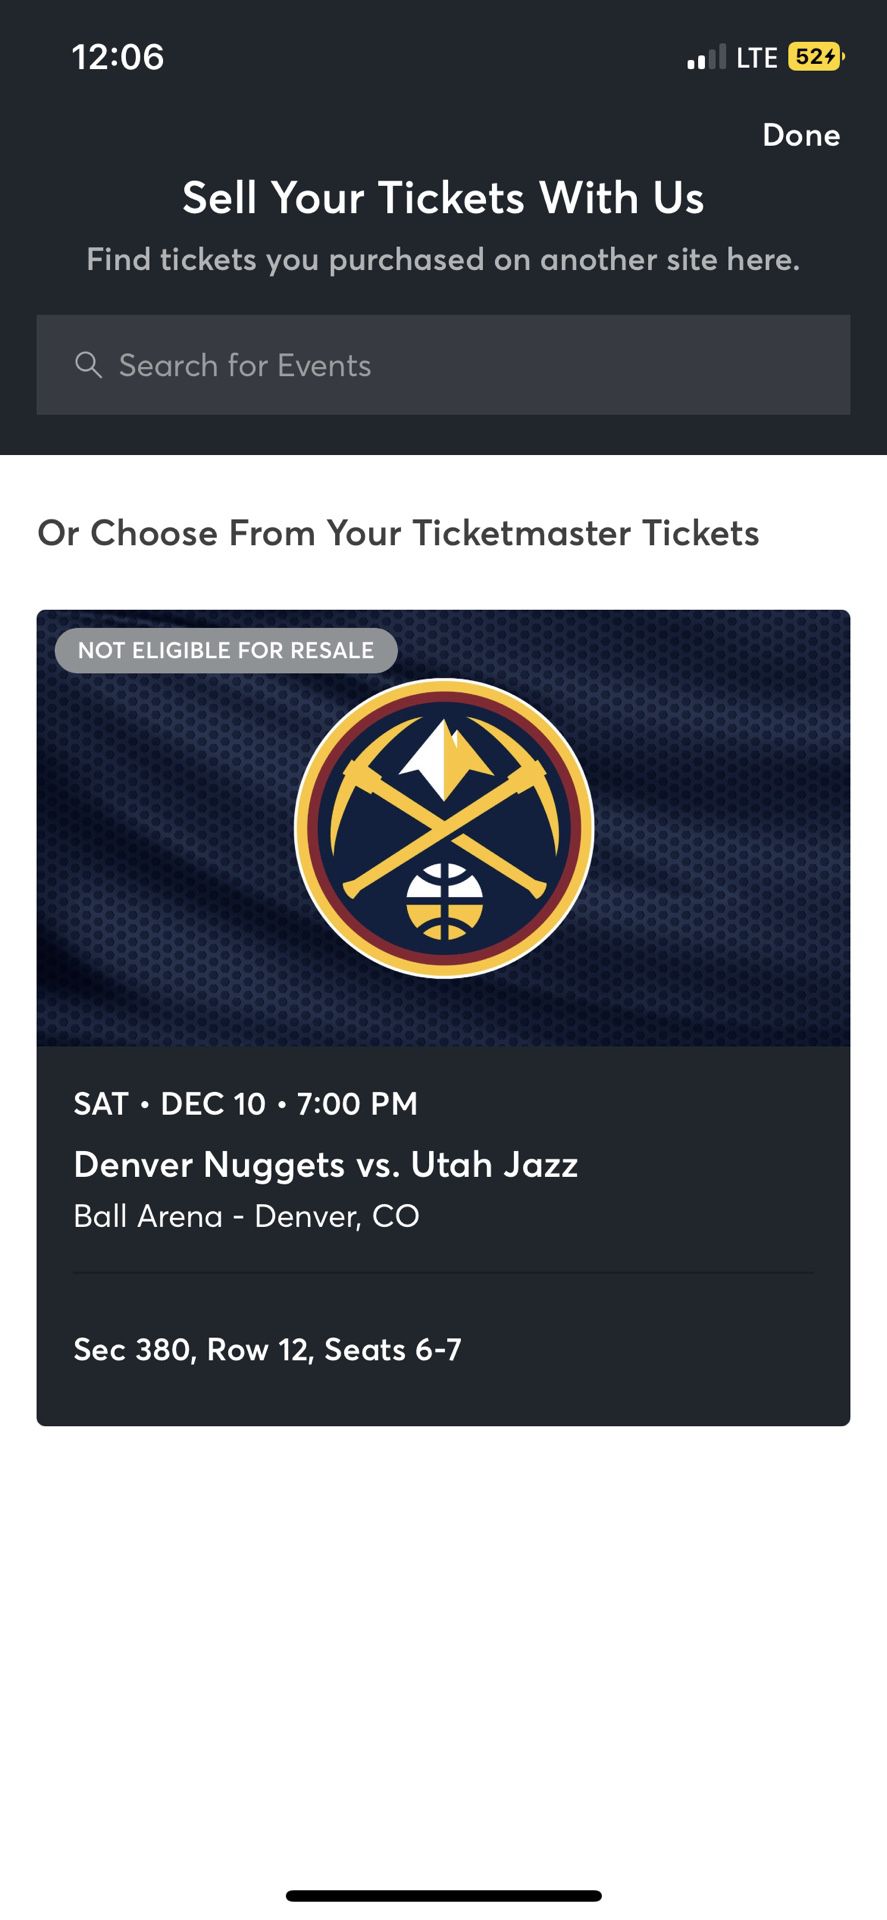 Denver Nuggets 2 Tickets